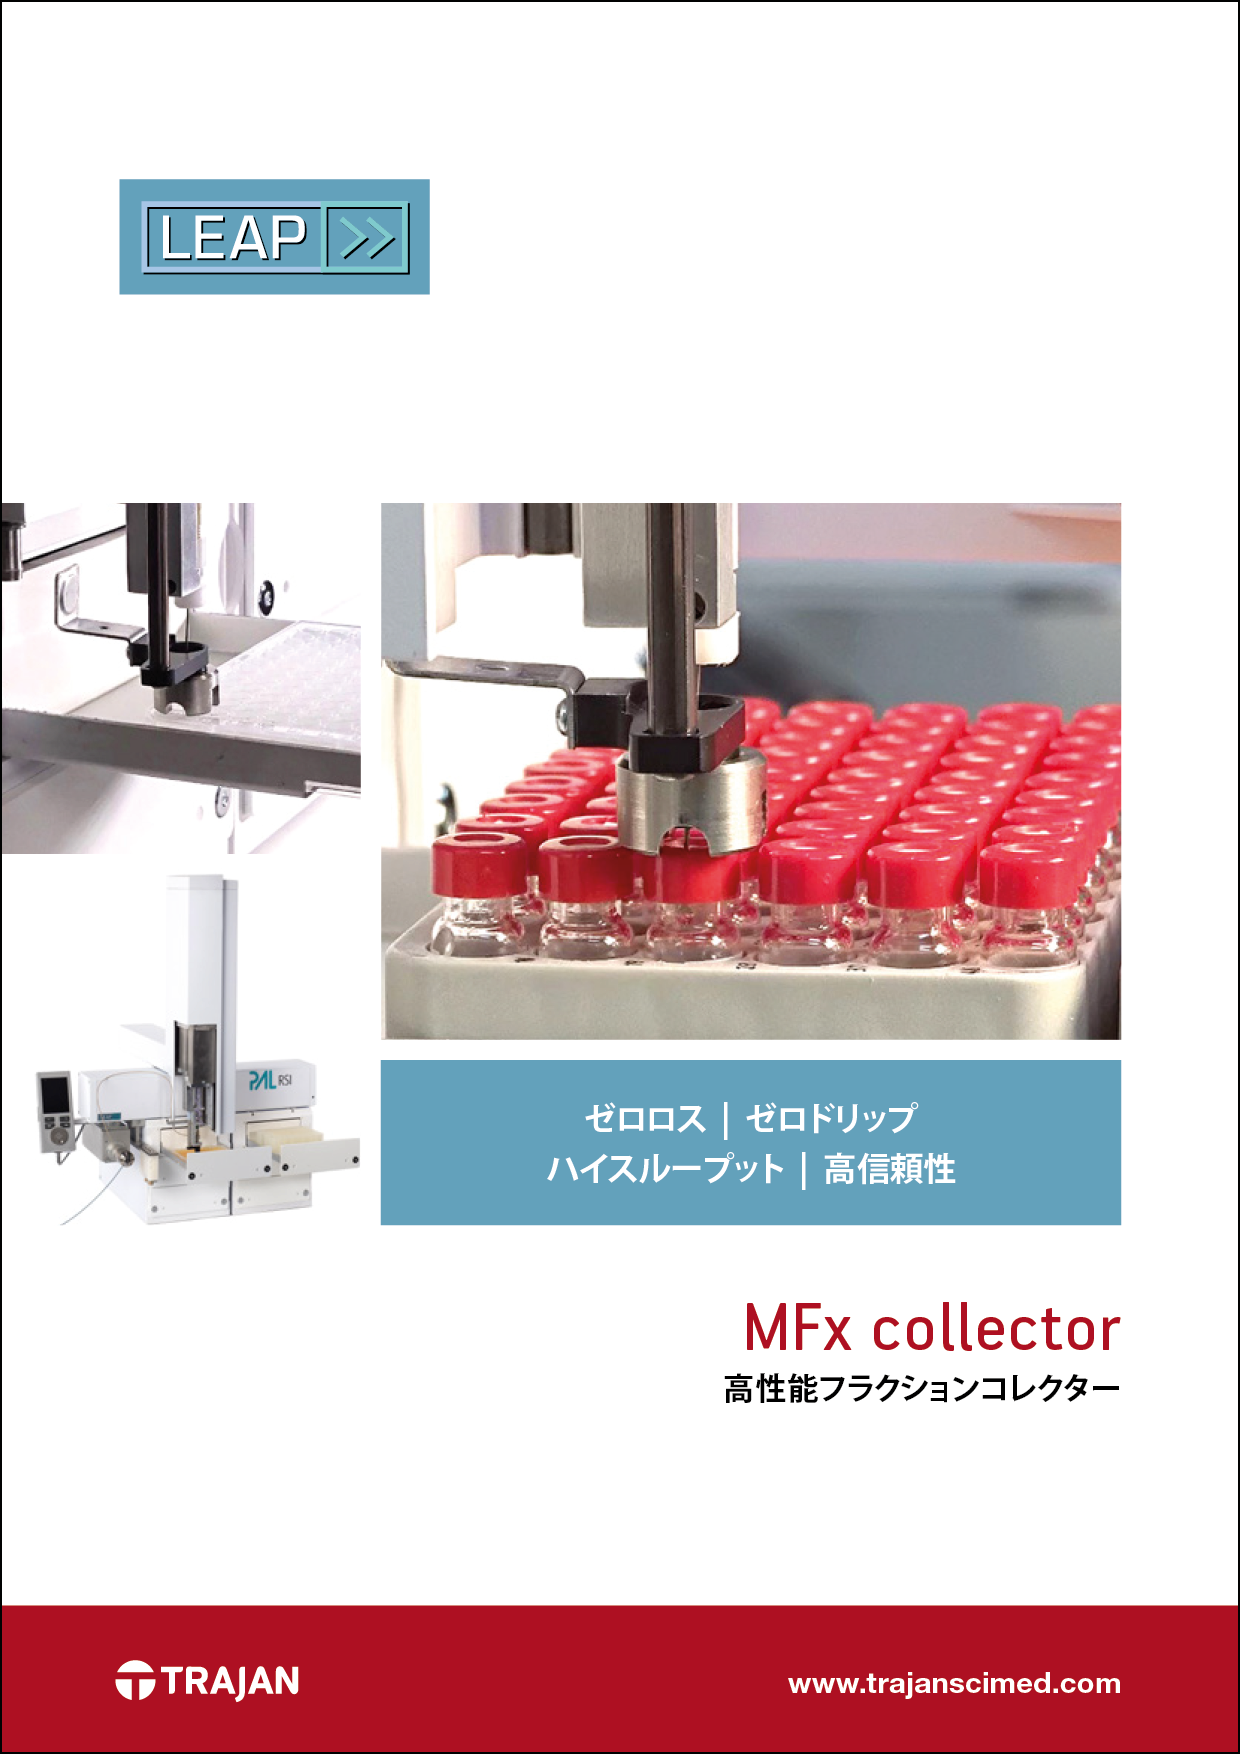 Brochure - MFx collector (Japanese)